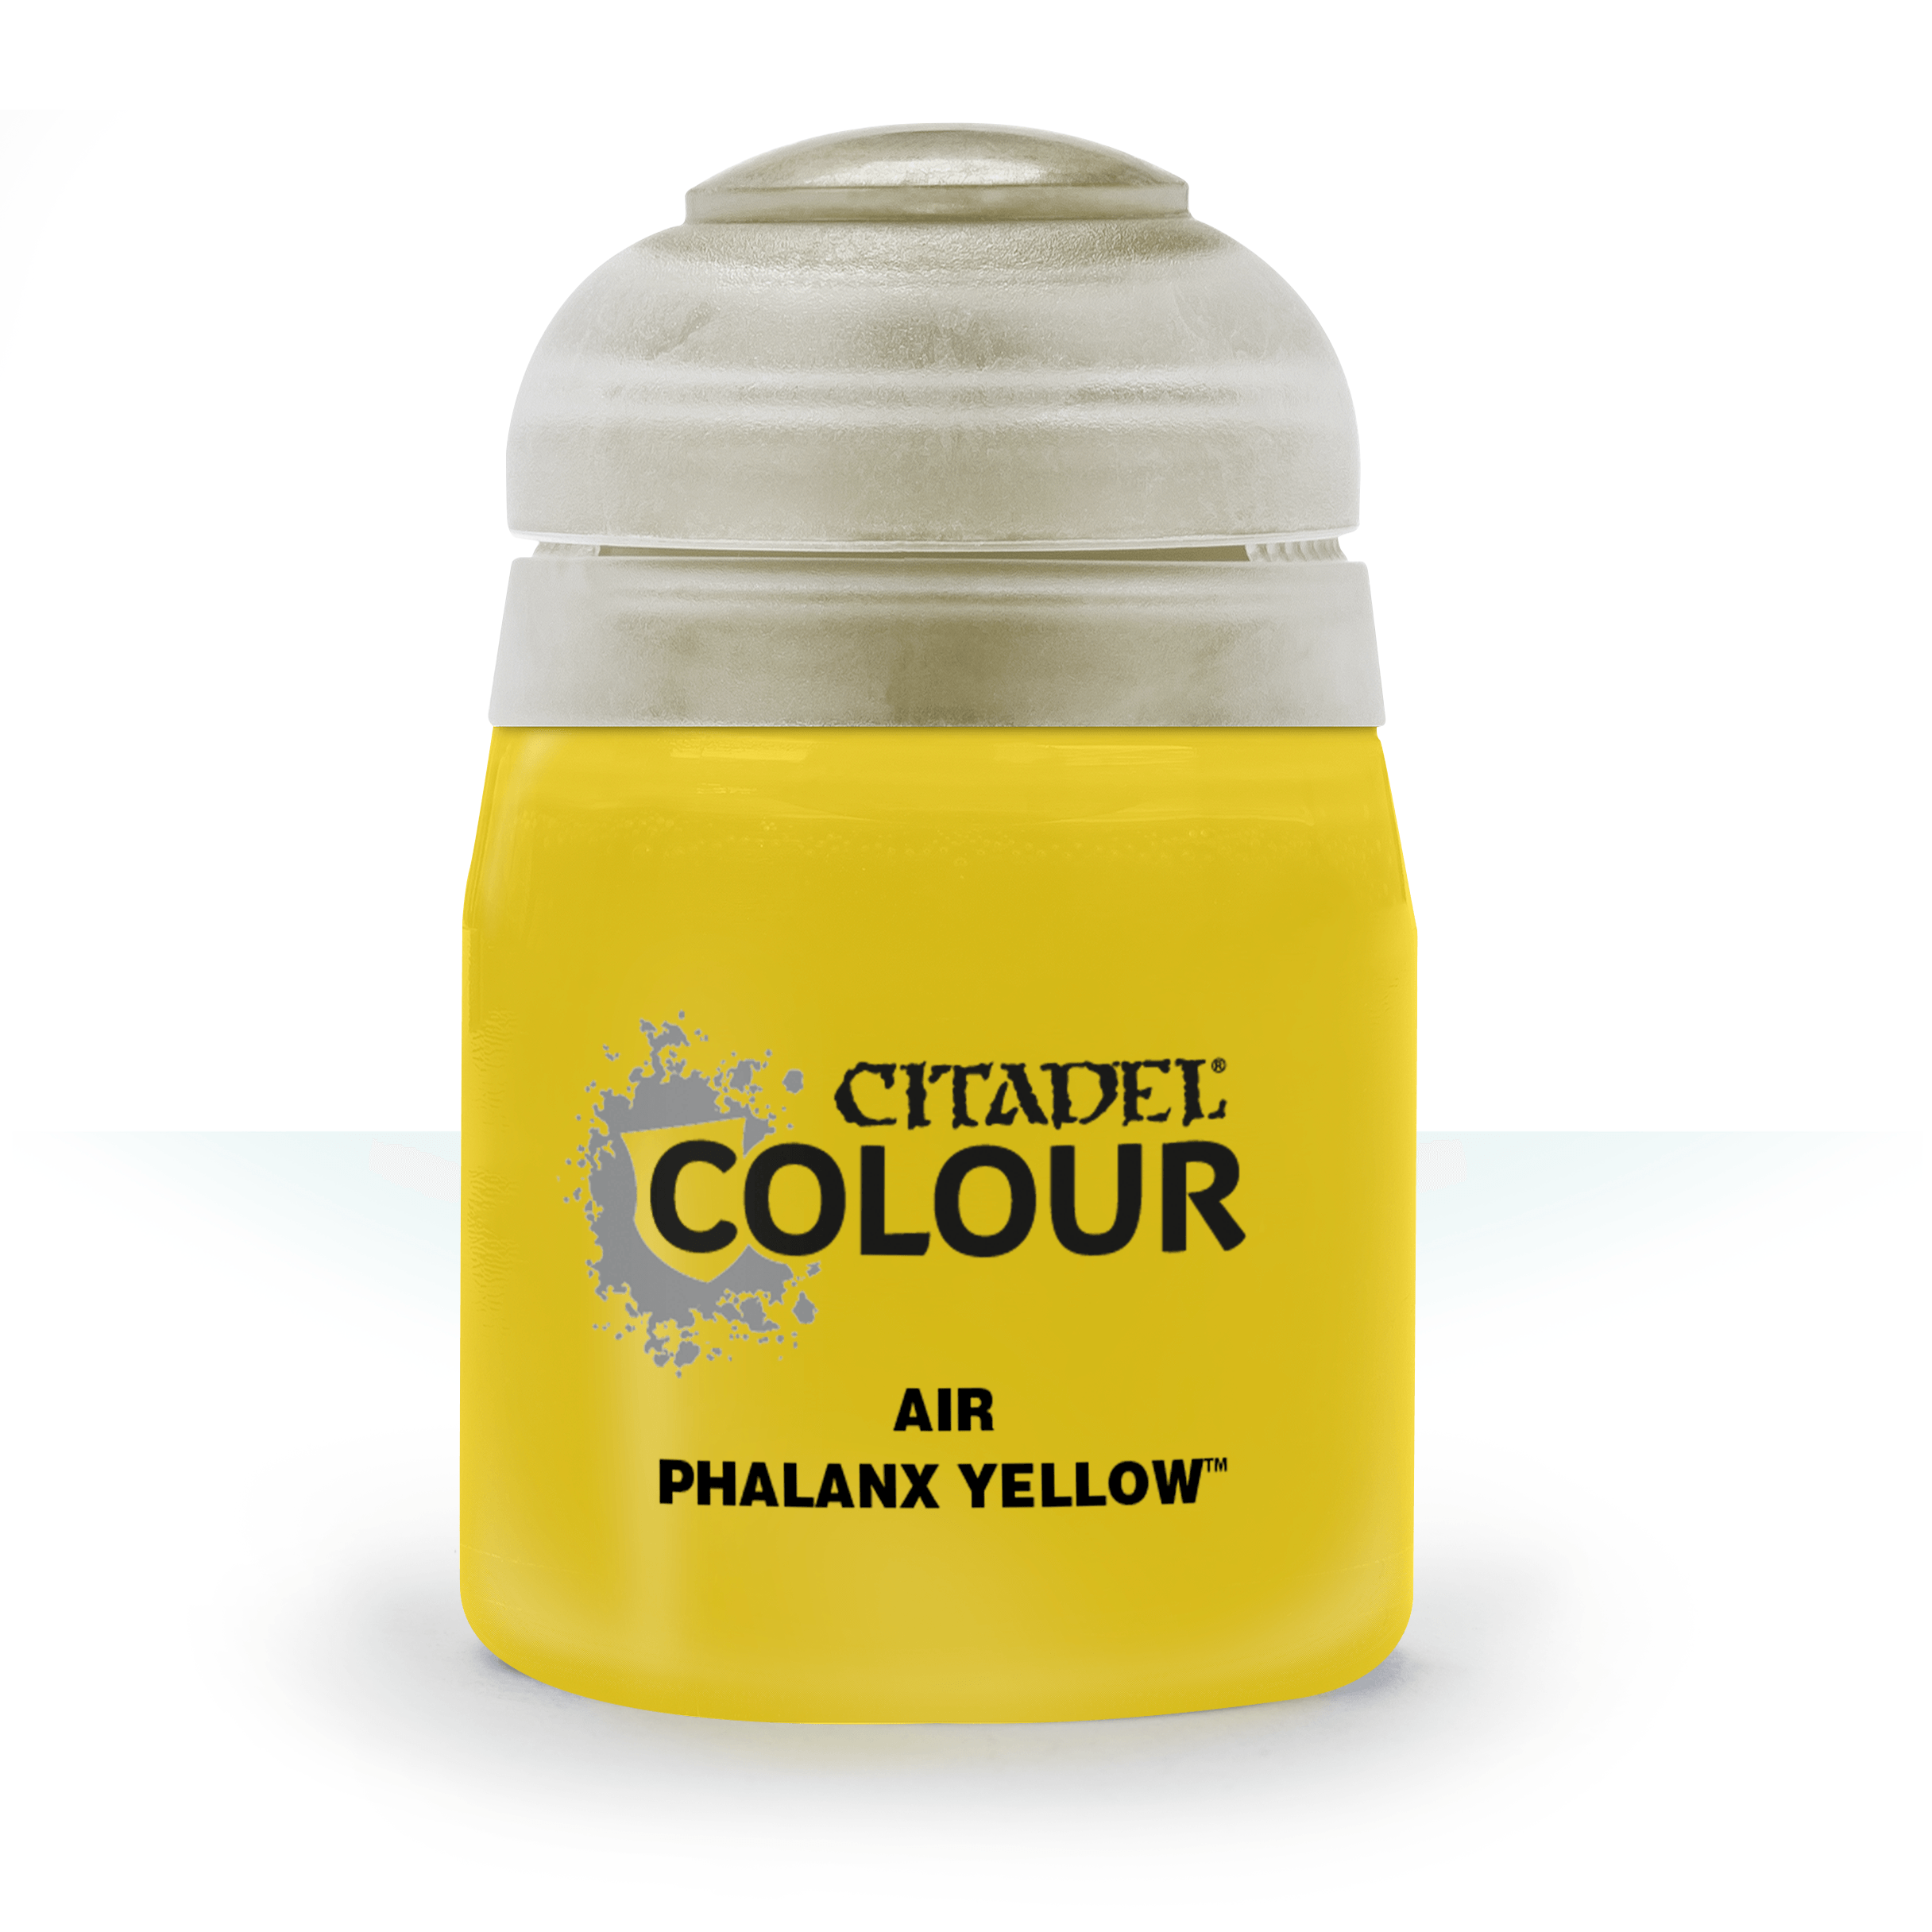 Air Phalanx Yellow - Citadel Colour - 24 ml